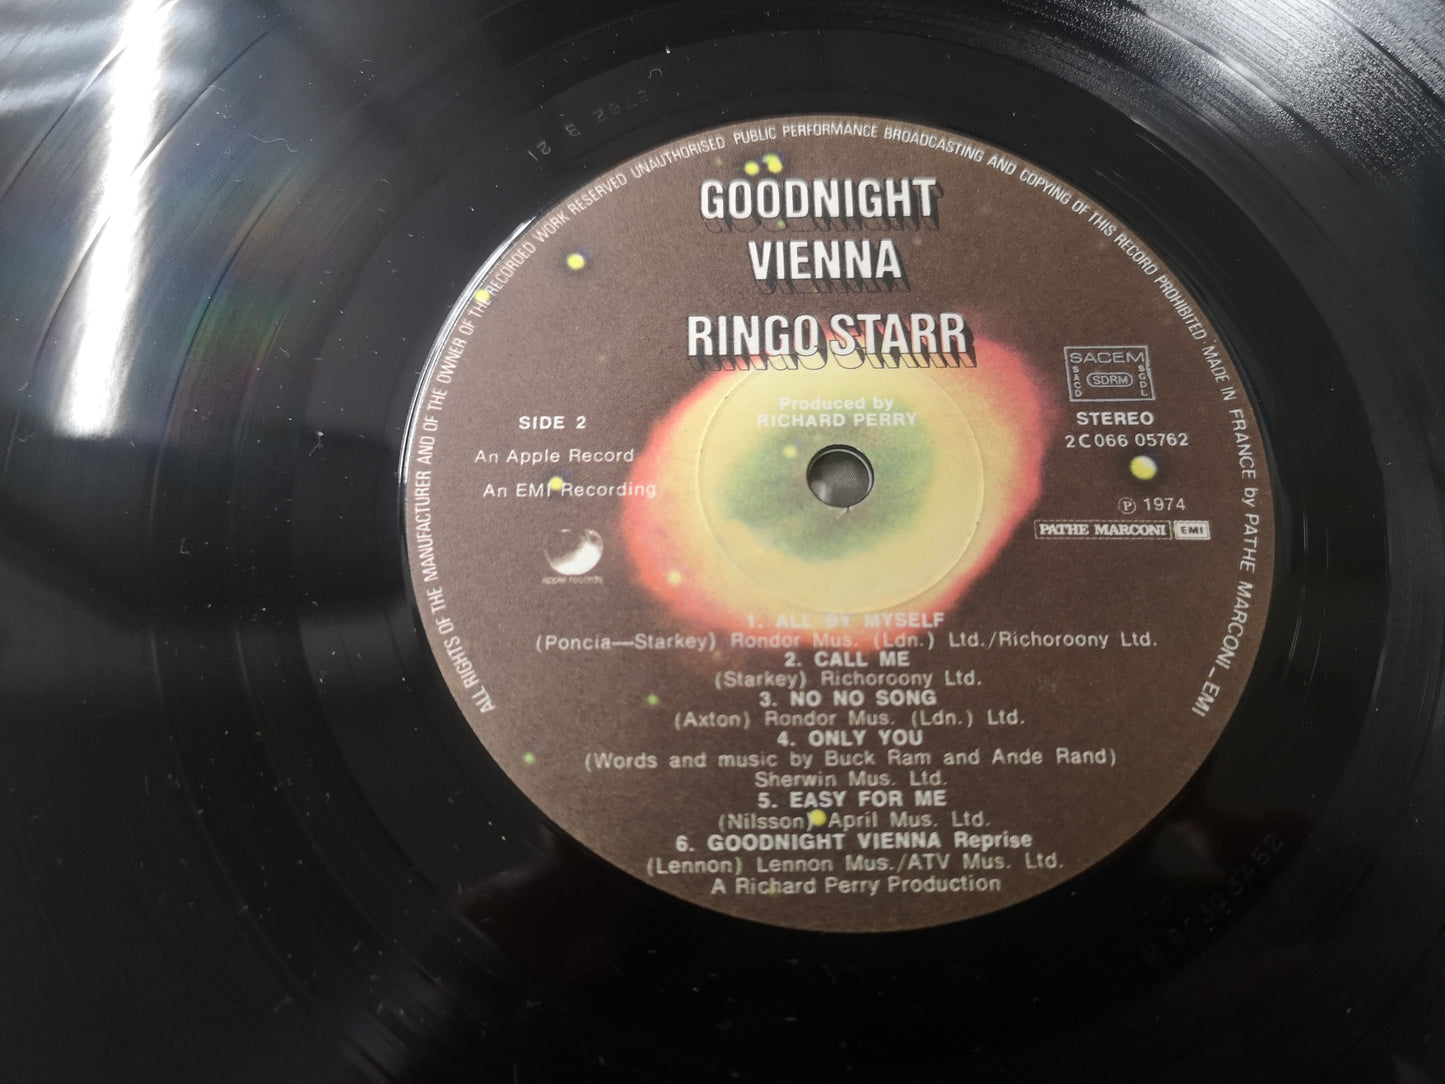 Ringo Starr "Goodnight Vienna" Orig France 1974 VG++/EM-